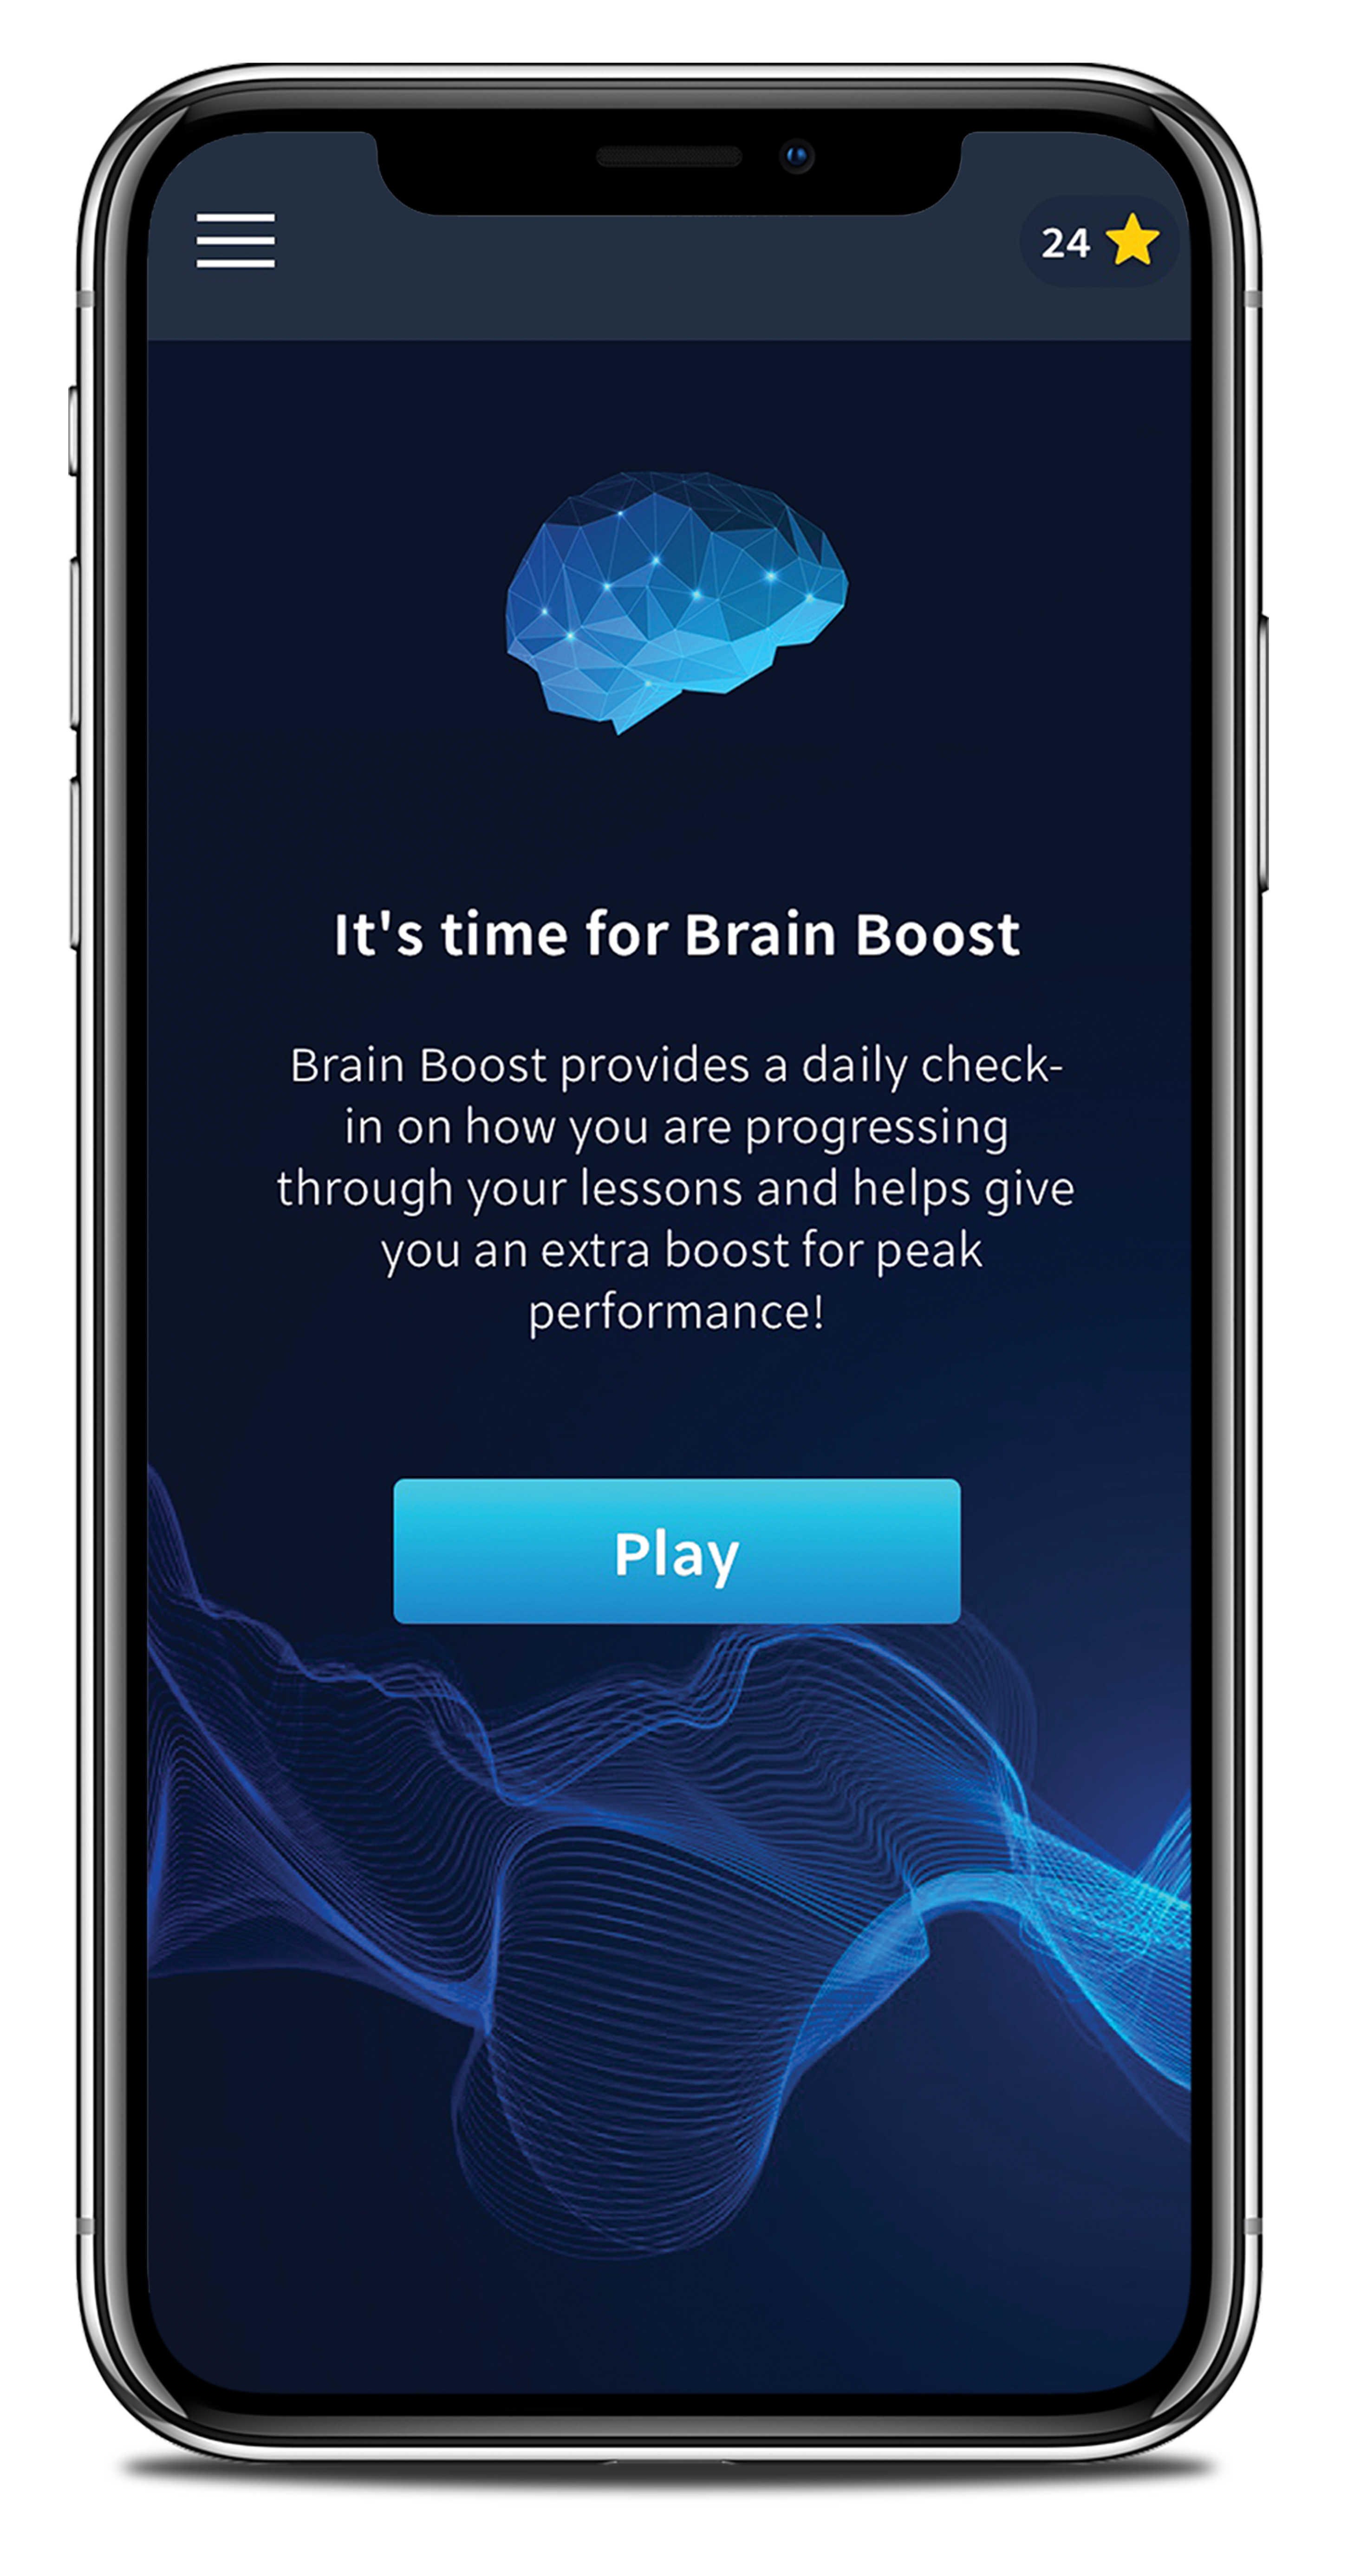 EdApp's algorithm-based brain boost feature